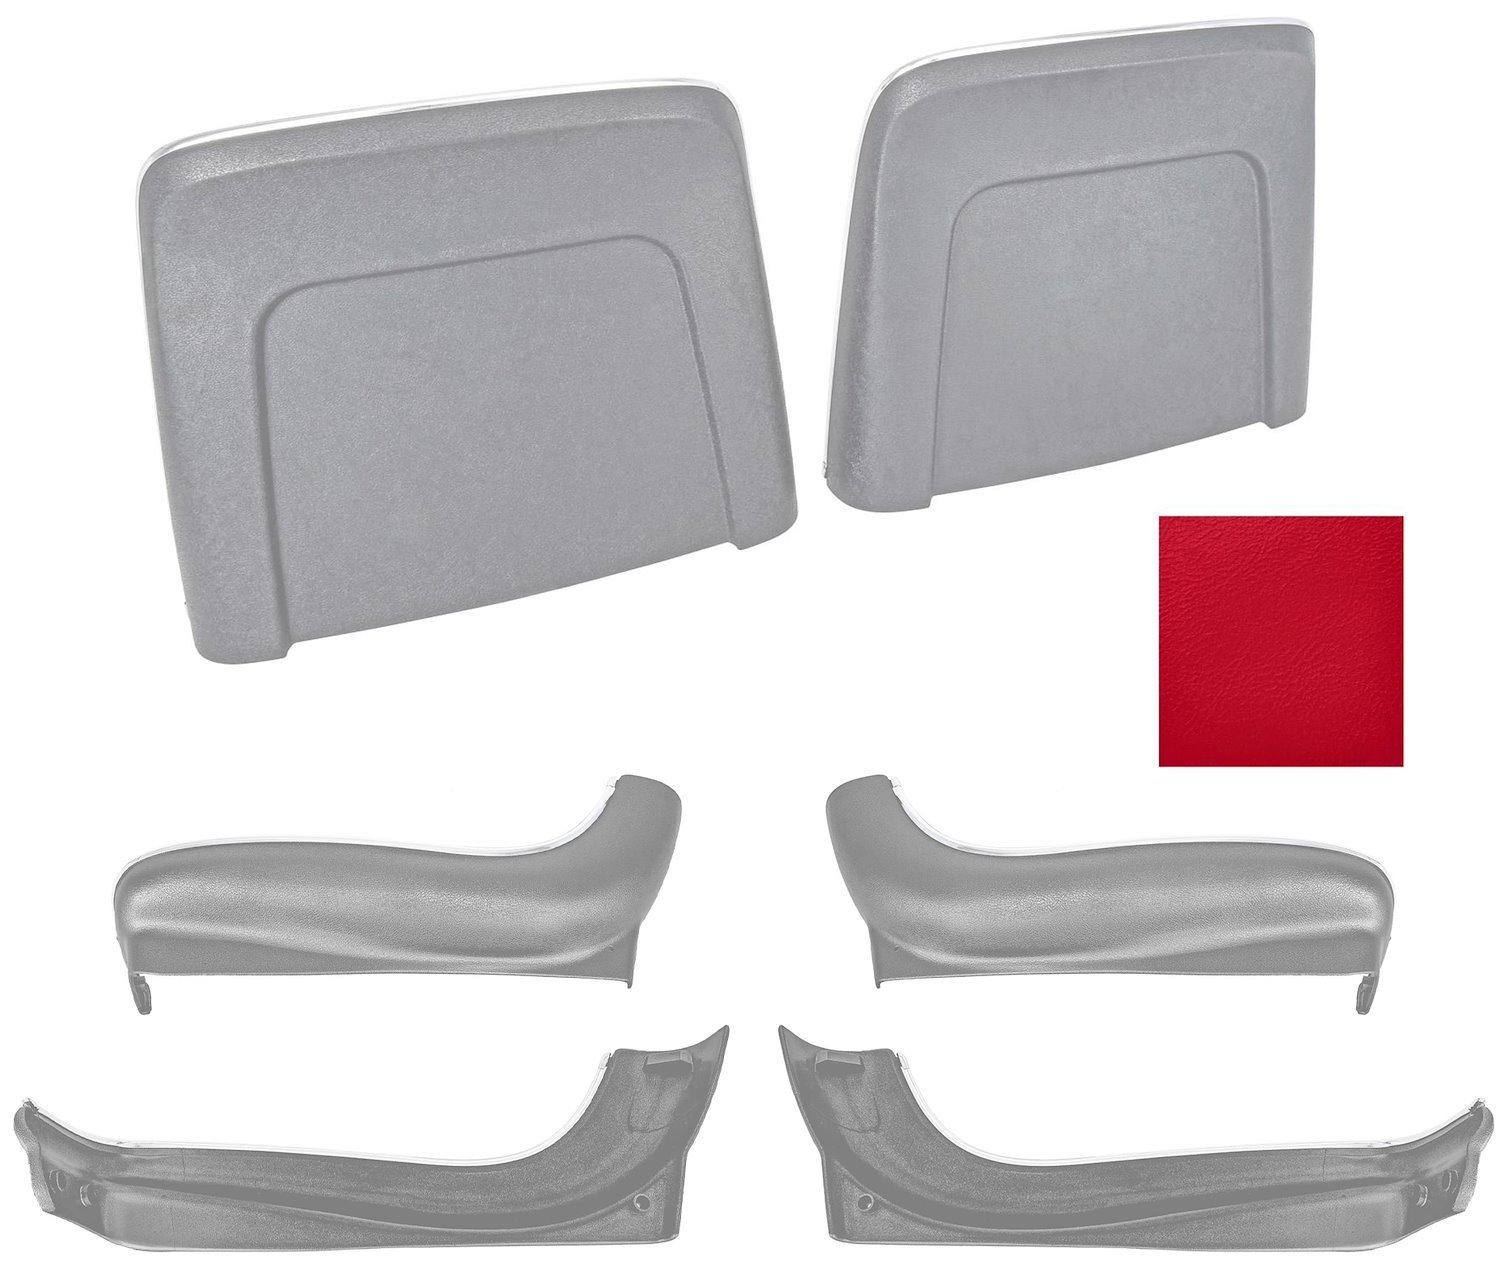 Seat Backs & Sides Kit Fits Select 1966 GM Models [Red]